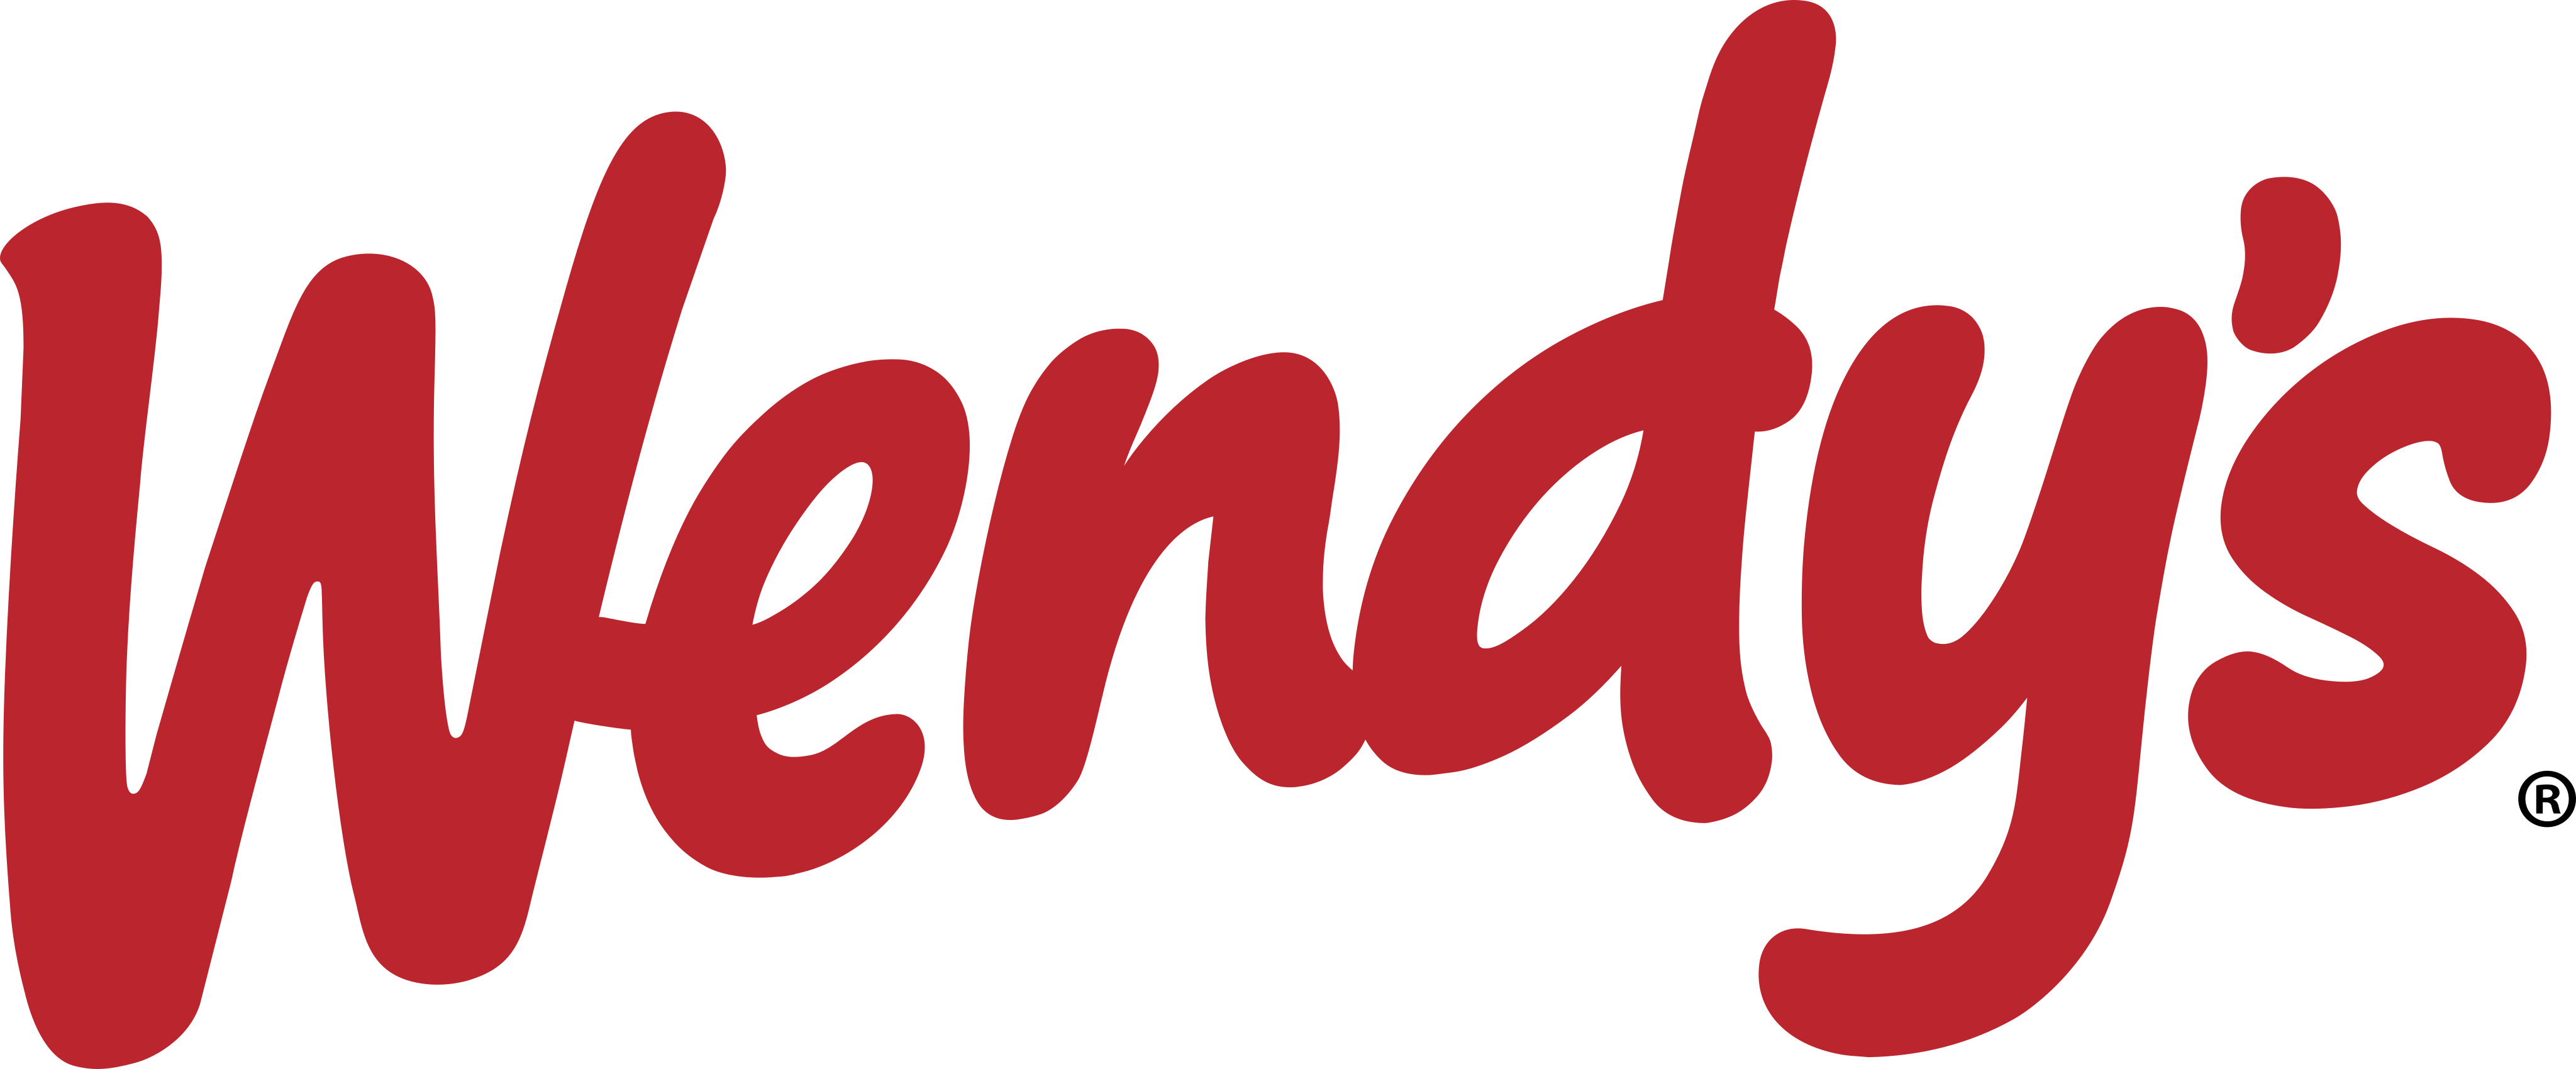 wendys logo 2 - Wendy's Logo